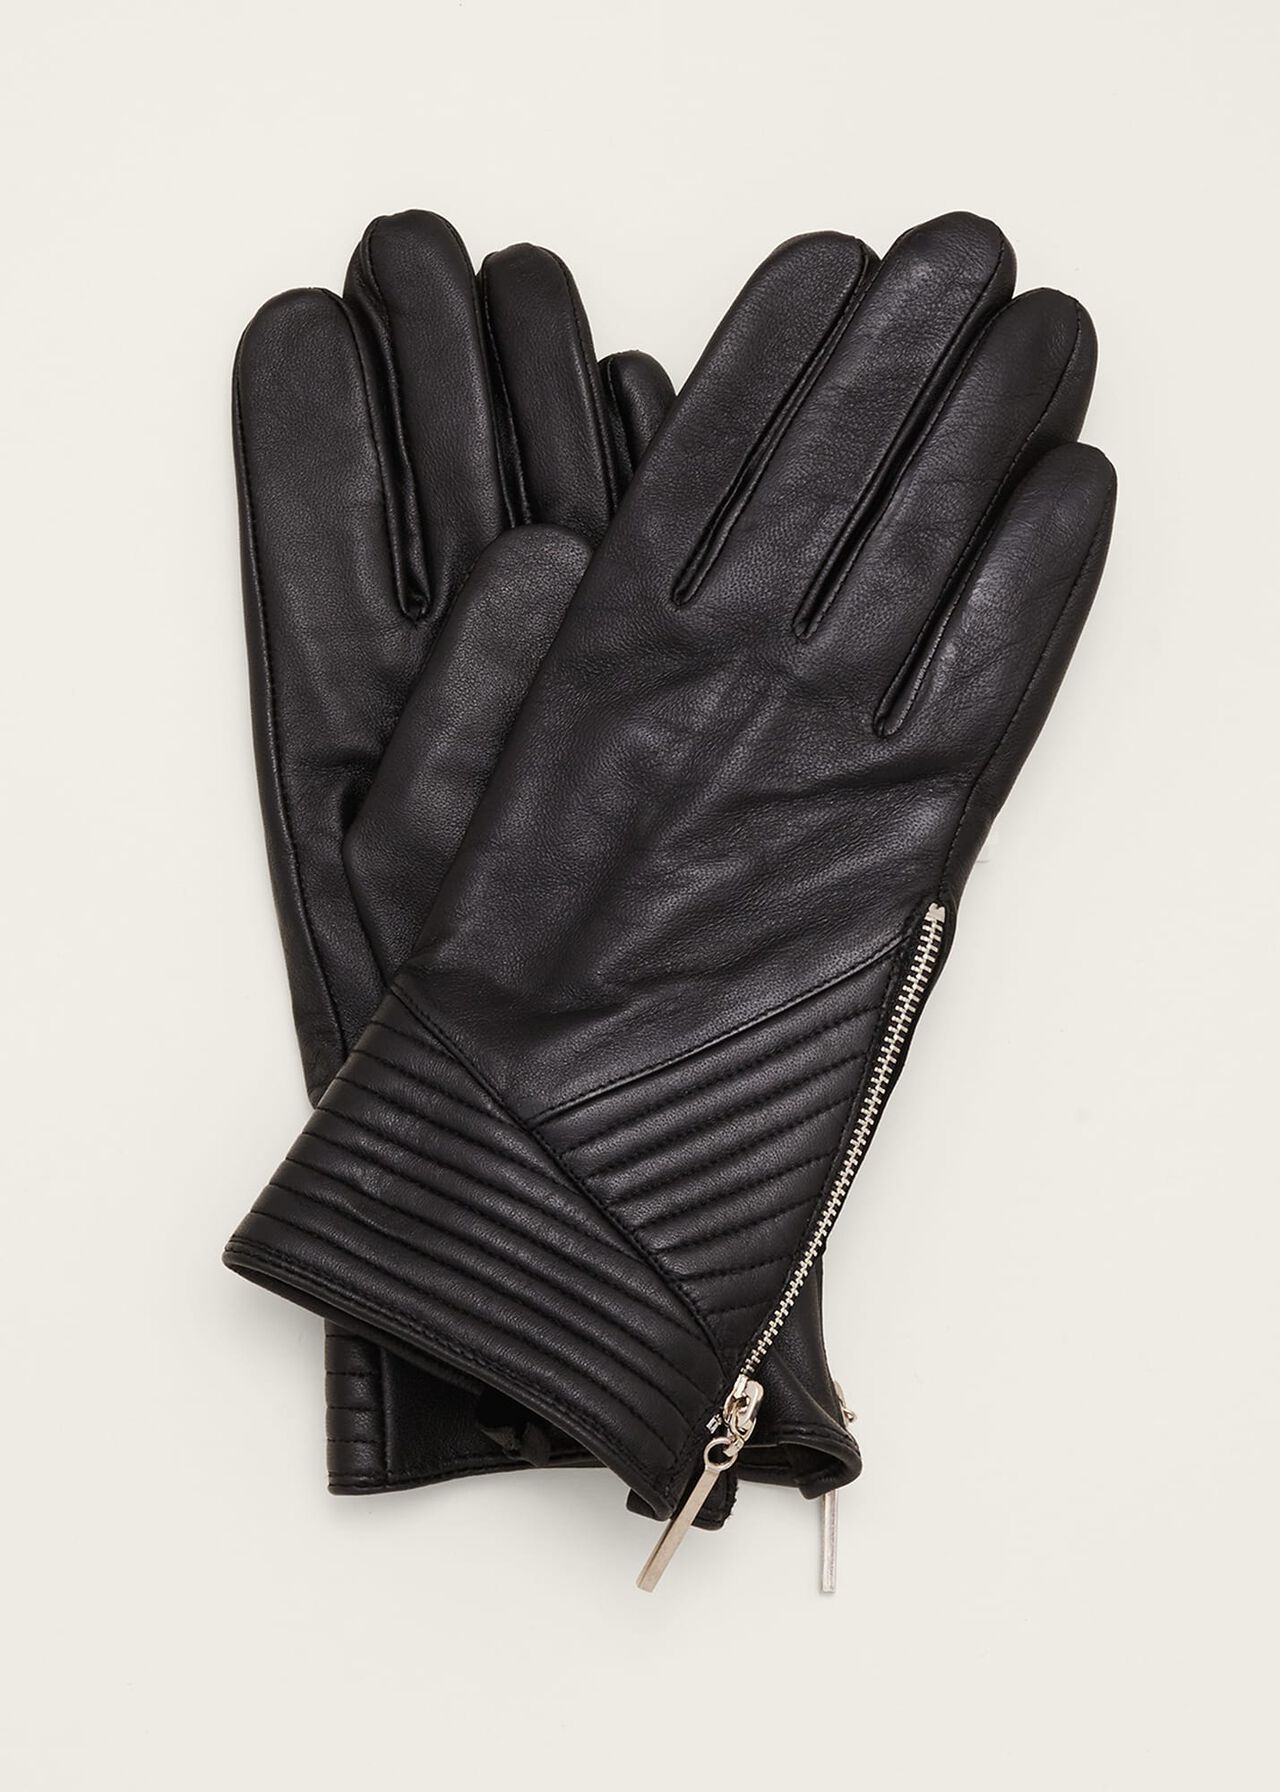 Ruthie Zip Leather Glove